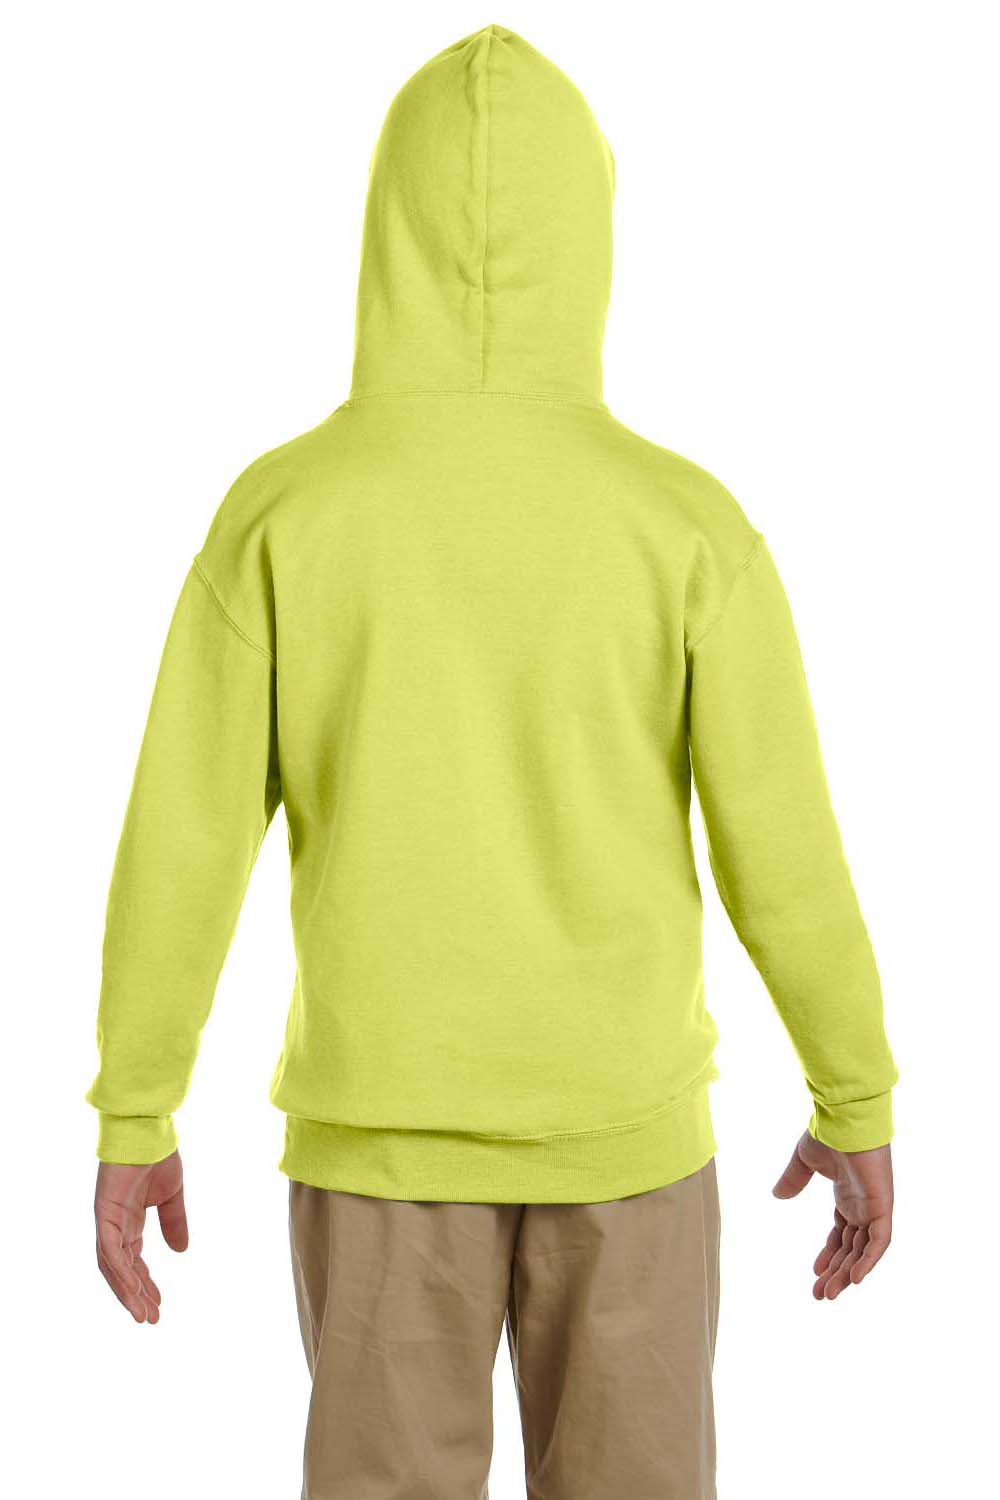 Jerzees 996Y Youth NuBlend Fleece Hooded Sweatshirt Hoodie Safety Green Back